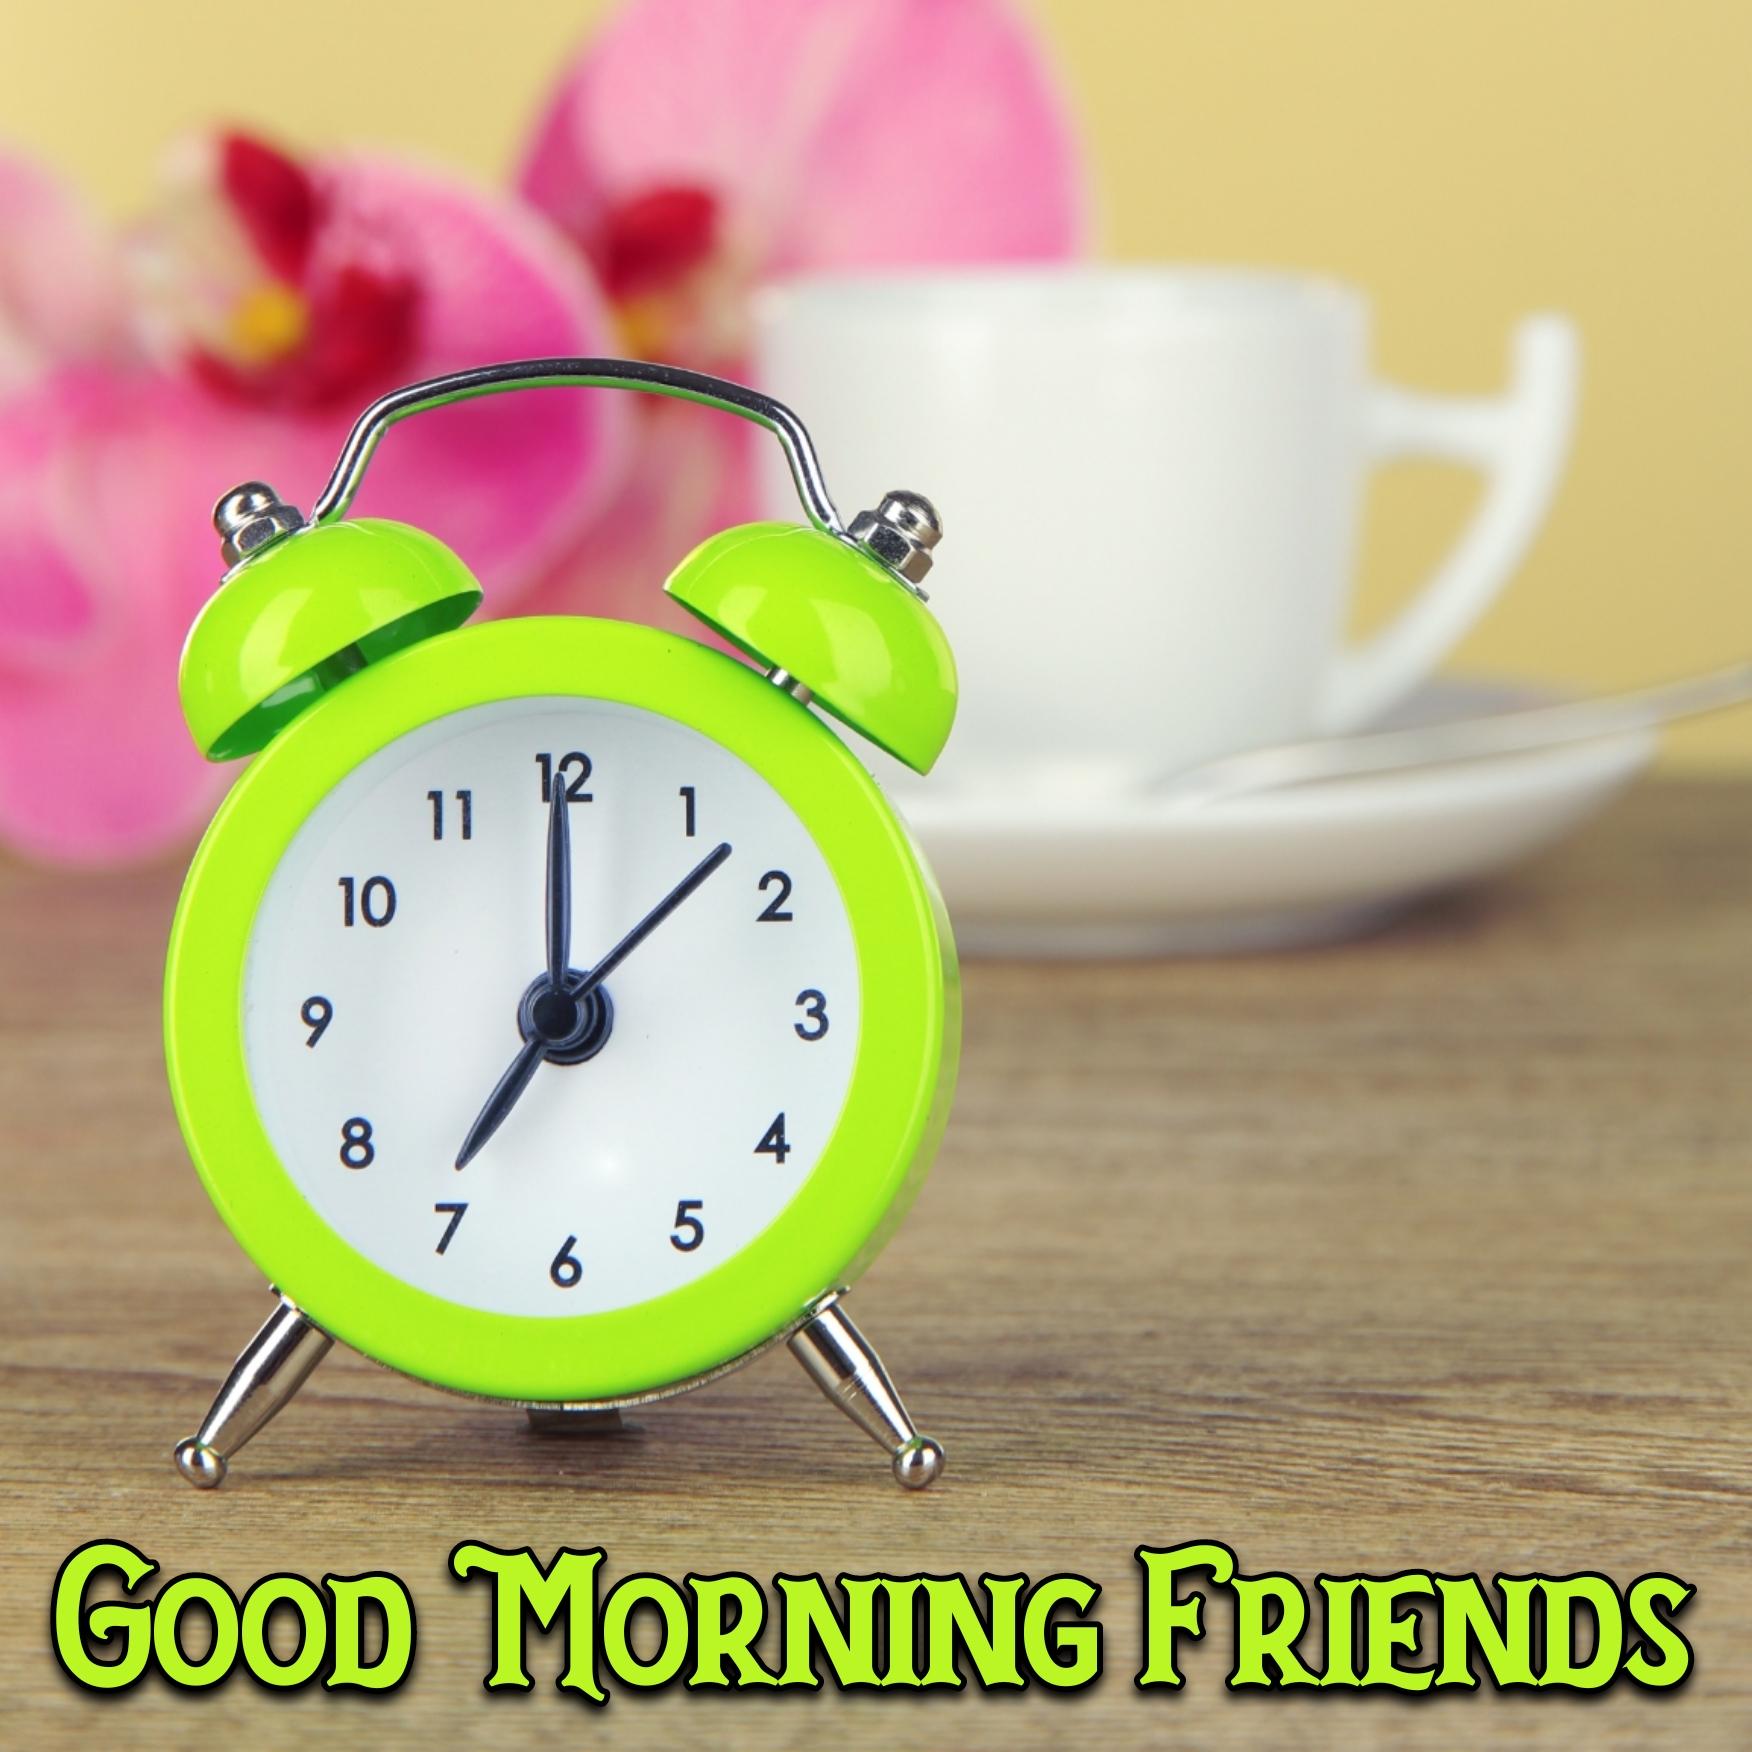 Good Morning Friends Alarm Clock Images